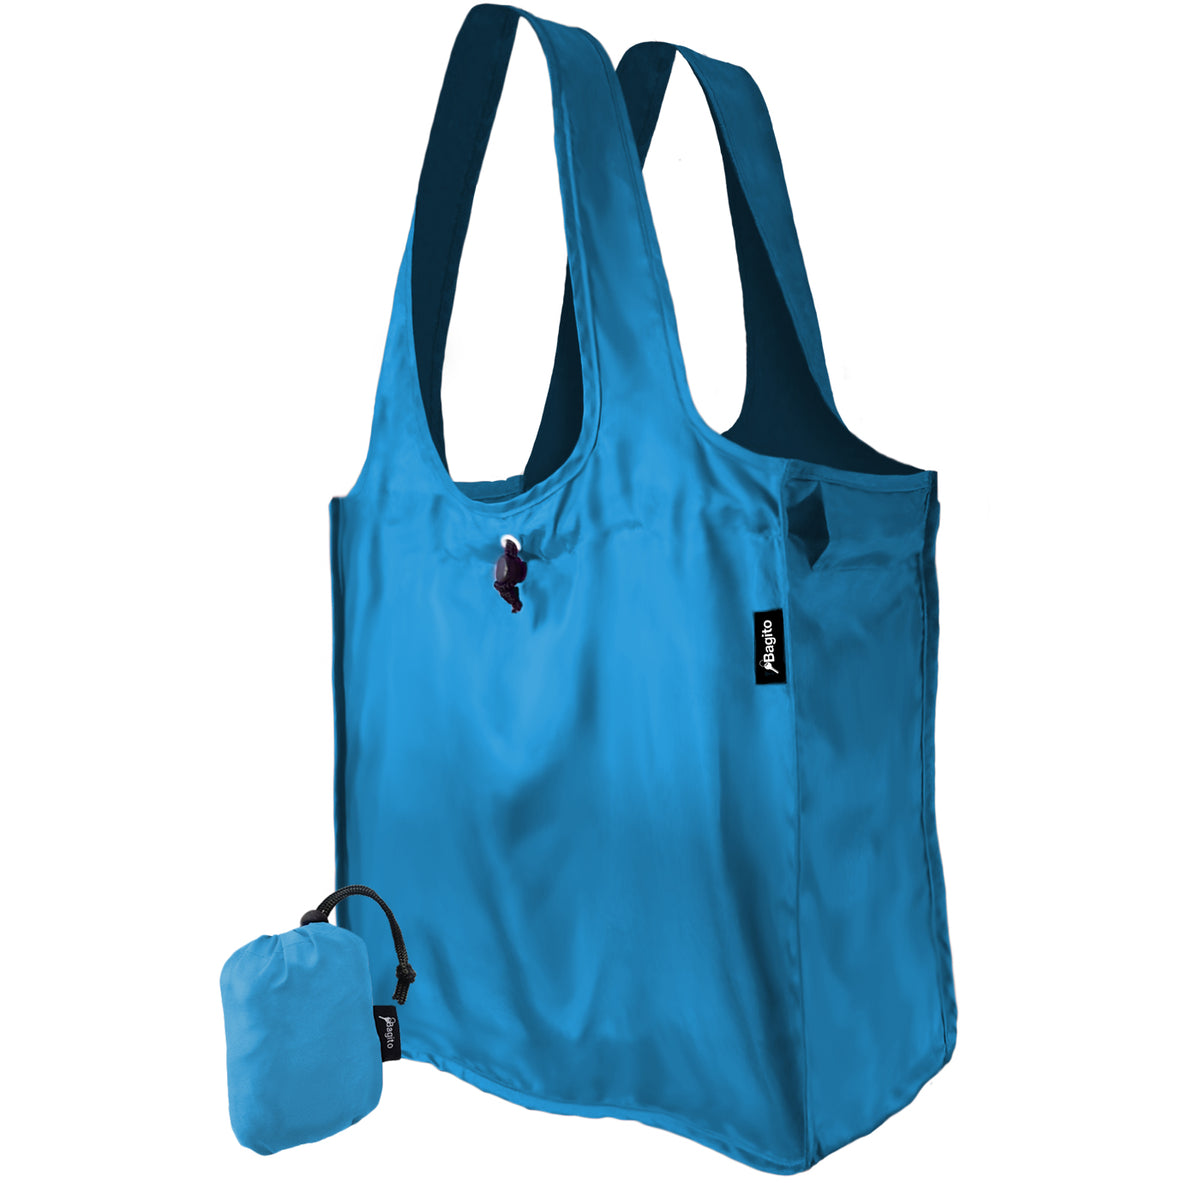  Hemoton Eco Bag Tote Purse for Women Large Capacity